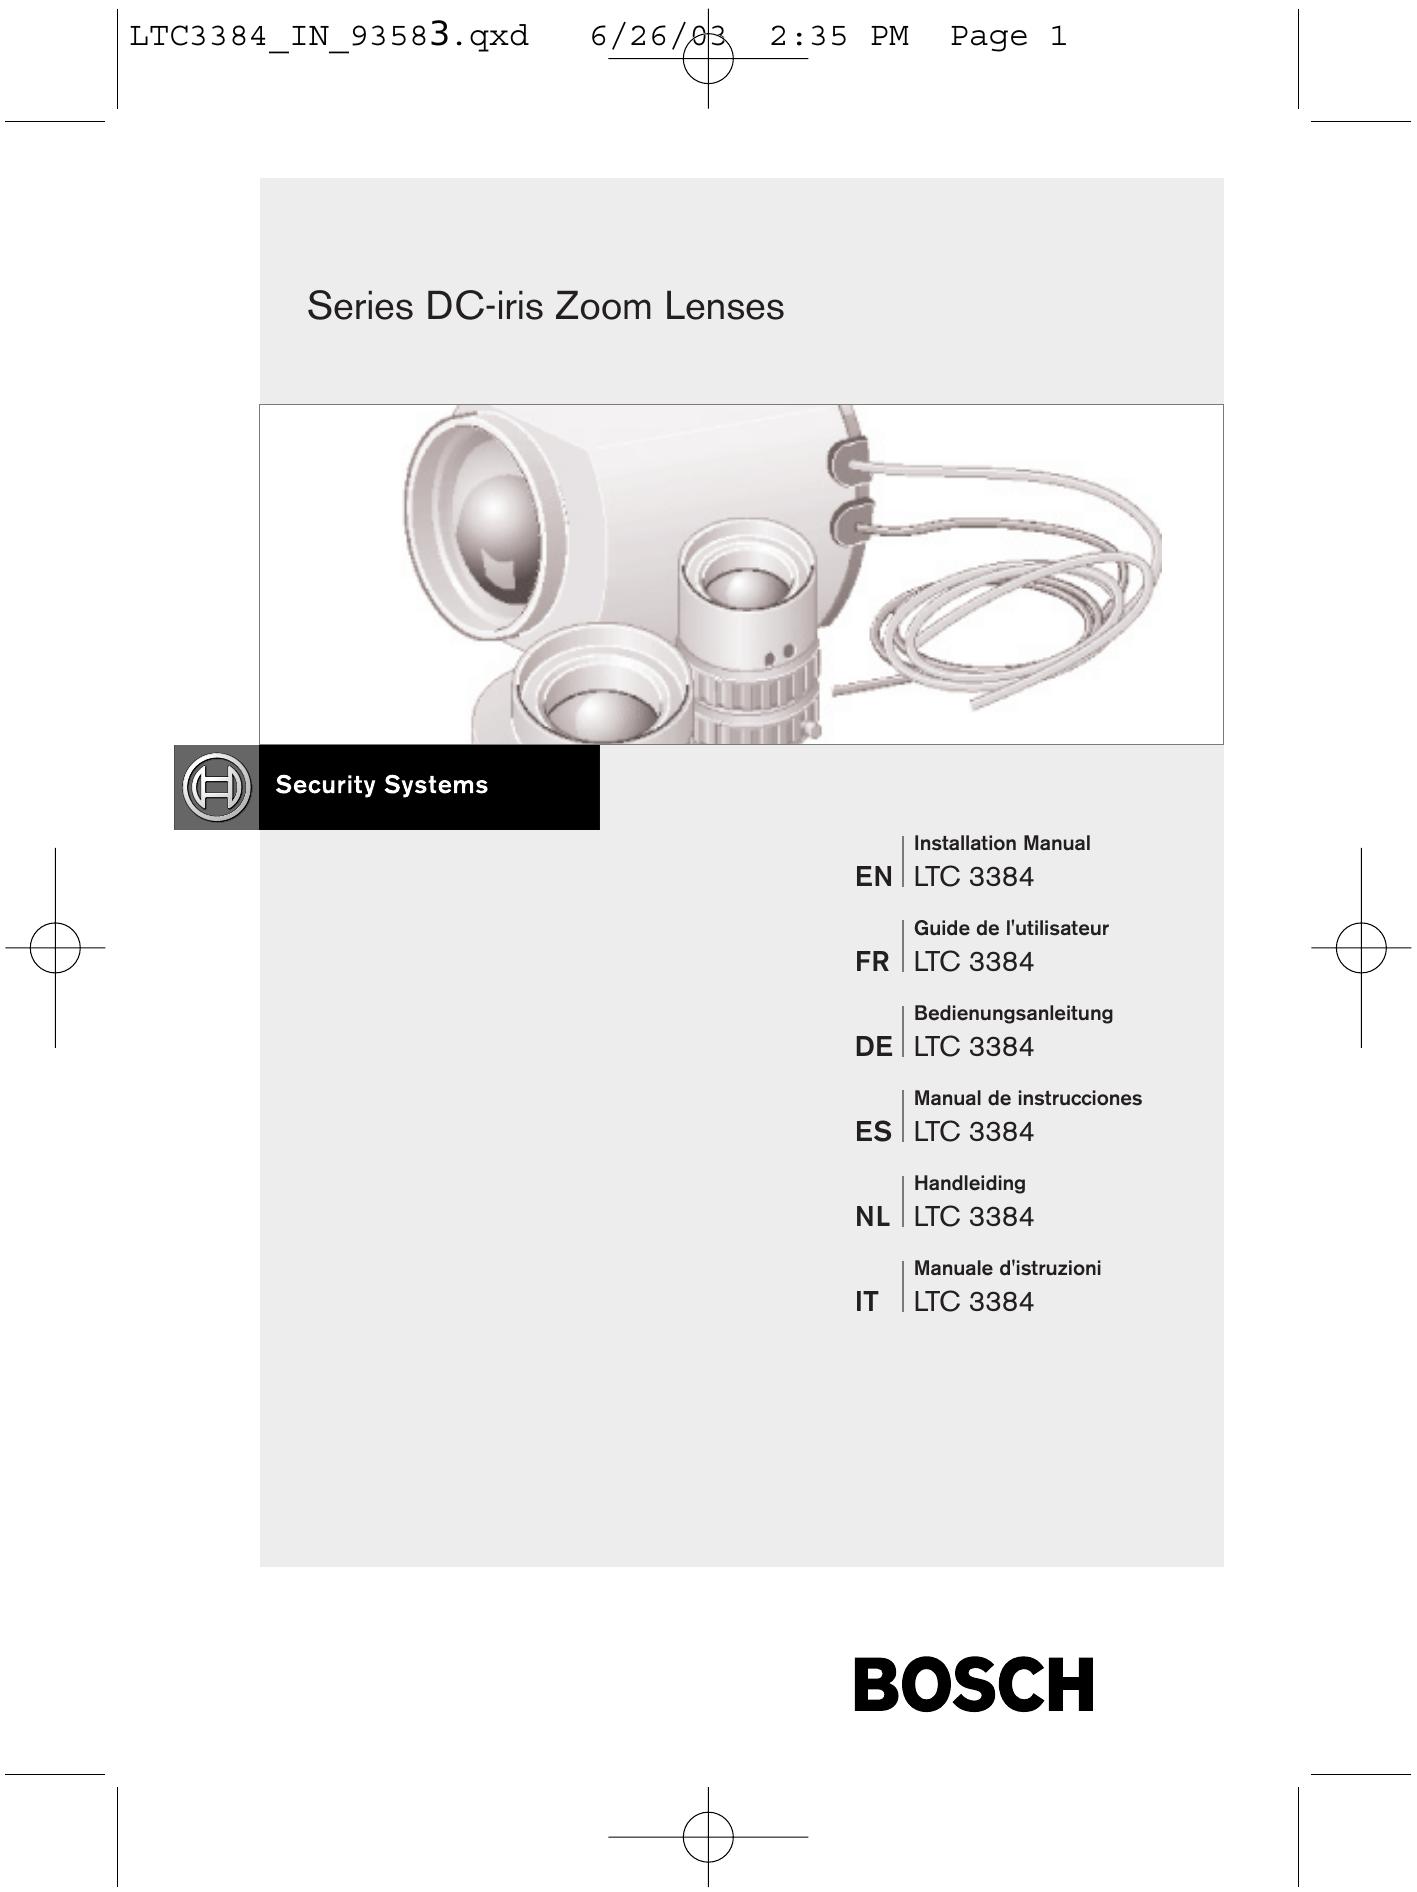 Bosch Appliances LTC 3354 Camera Lens User Manual